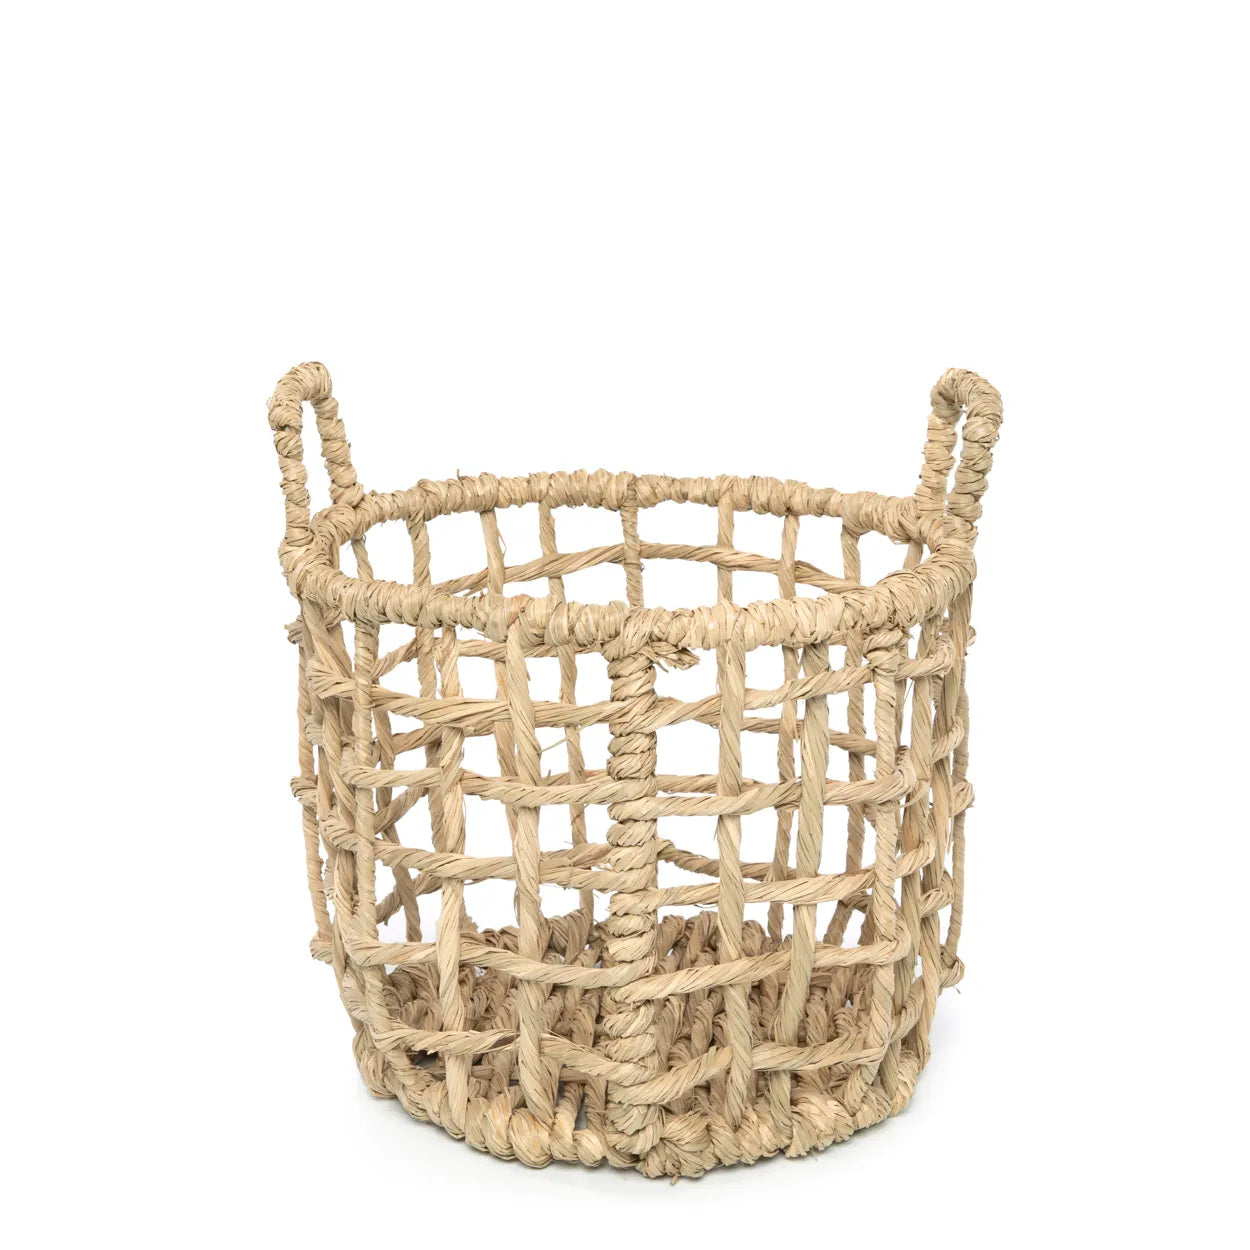 Cabo de Gata Charm Basket Set - Seagrass Woven Baskets